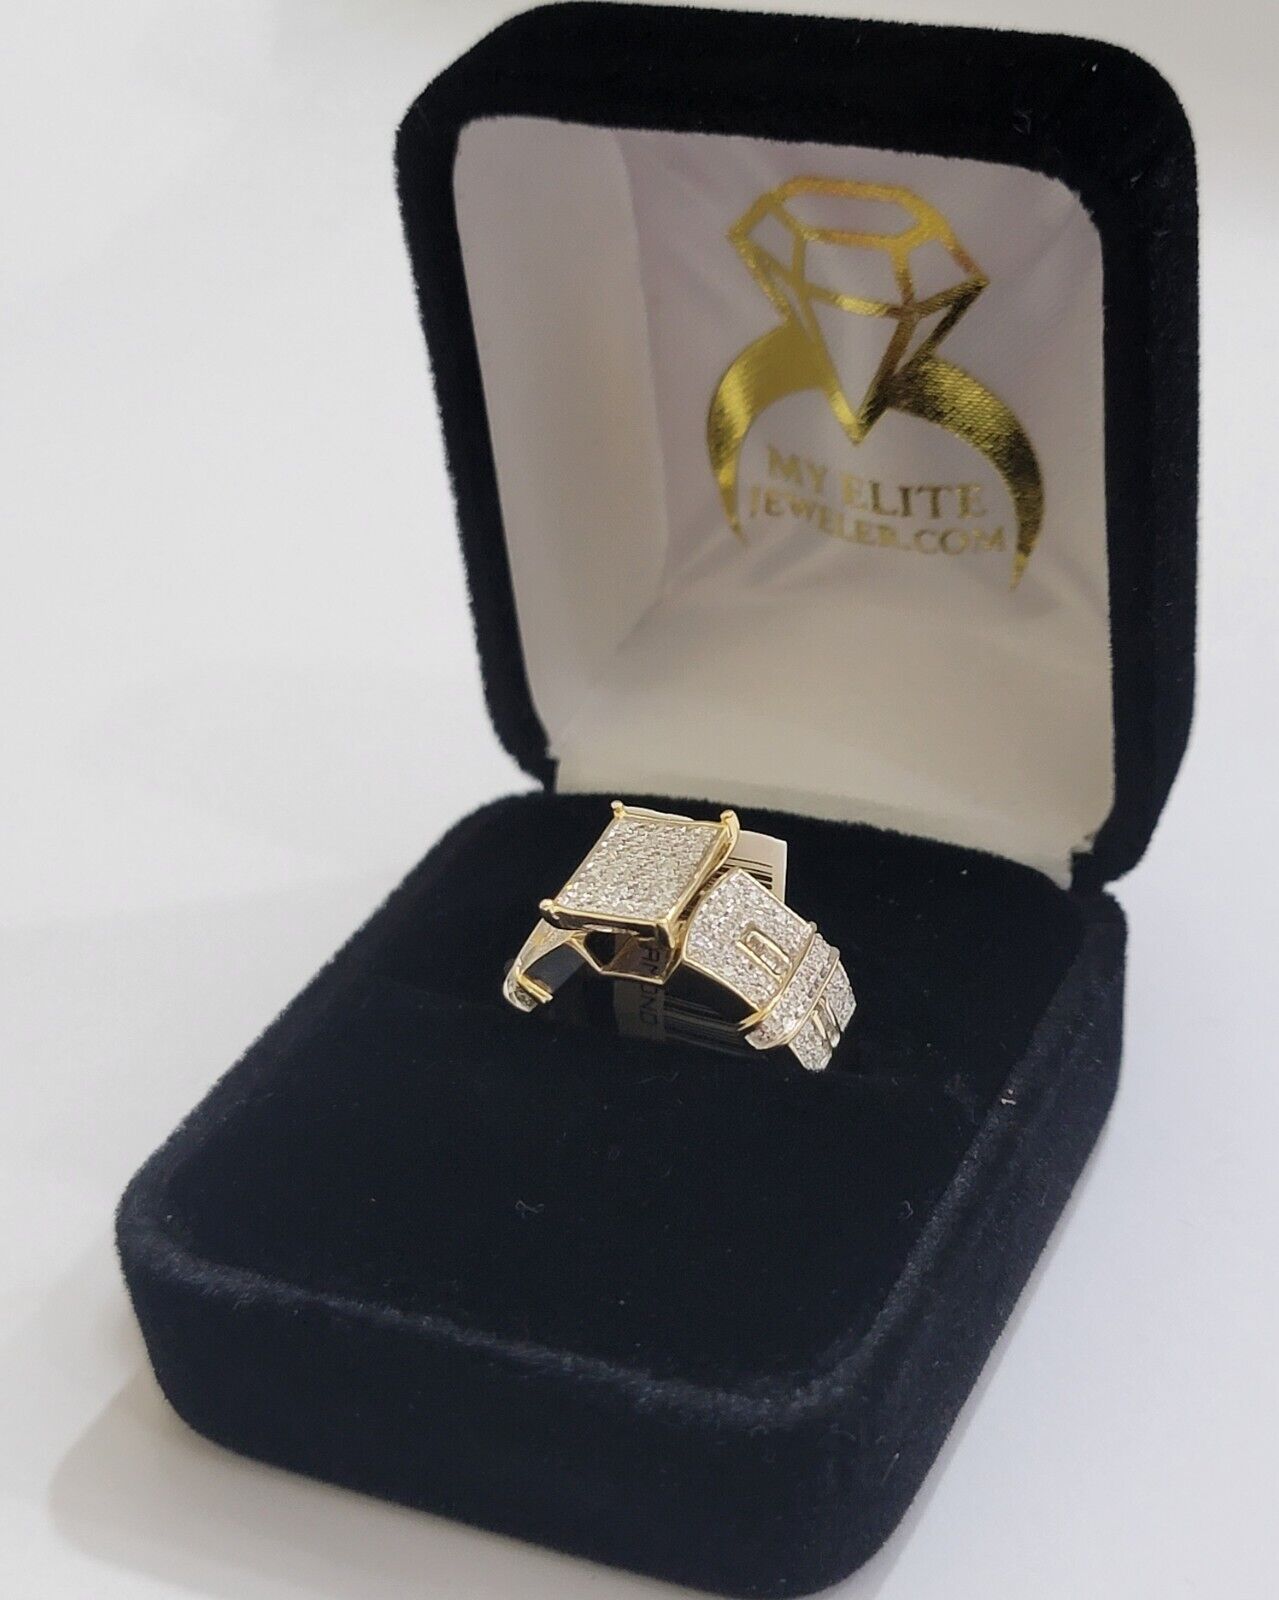 10k Yellow Gold Ladies Diamond Cinderella Ring Wedding Engagement Solid, Women